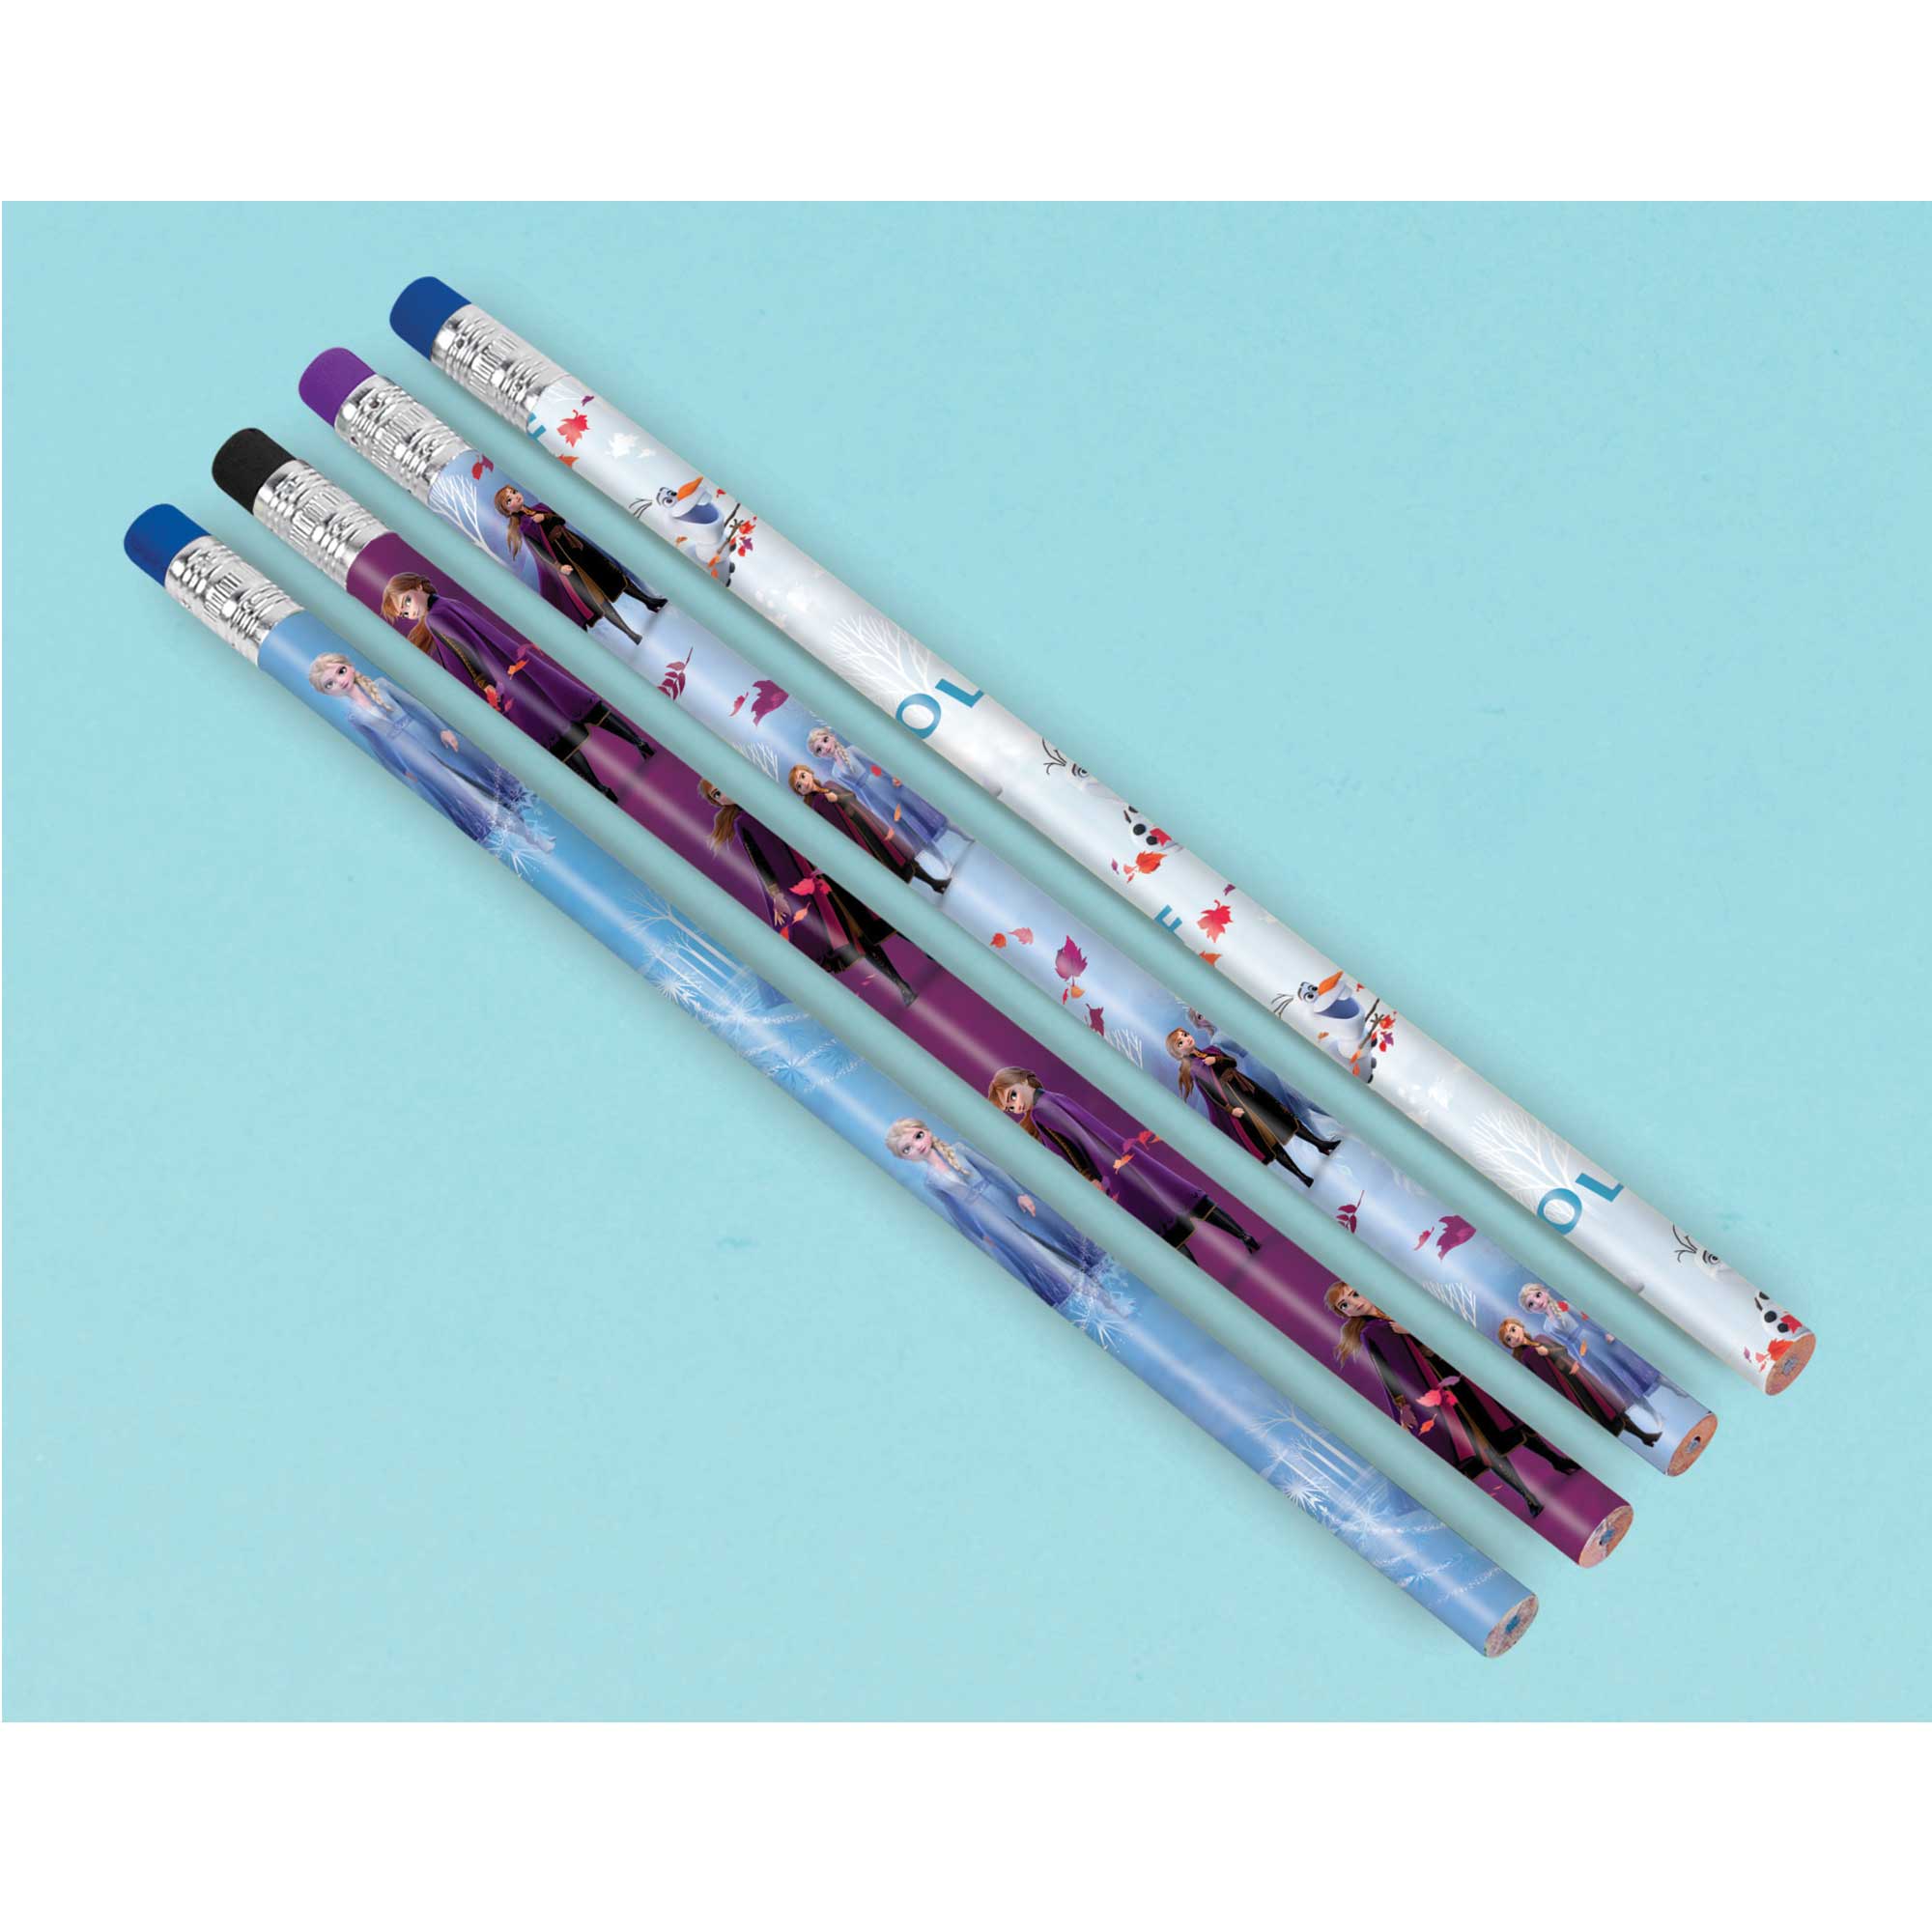 Frozen 2 Pencils Assorted Designs - 8 Pack Default Title